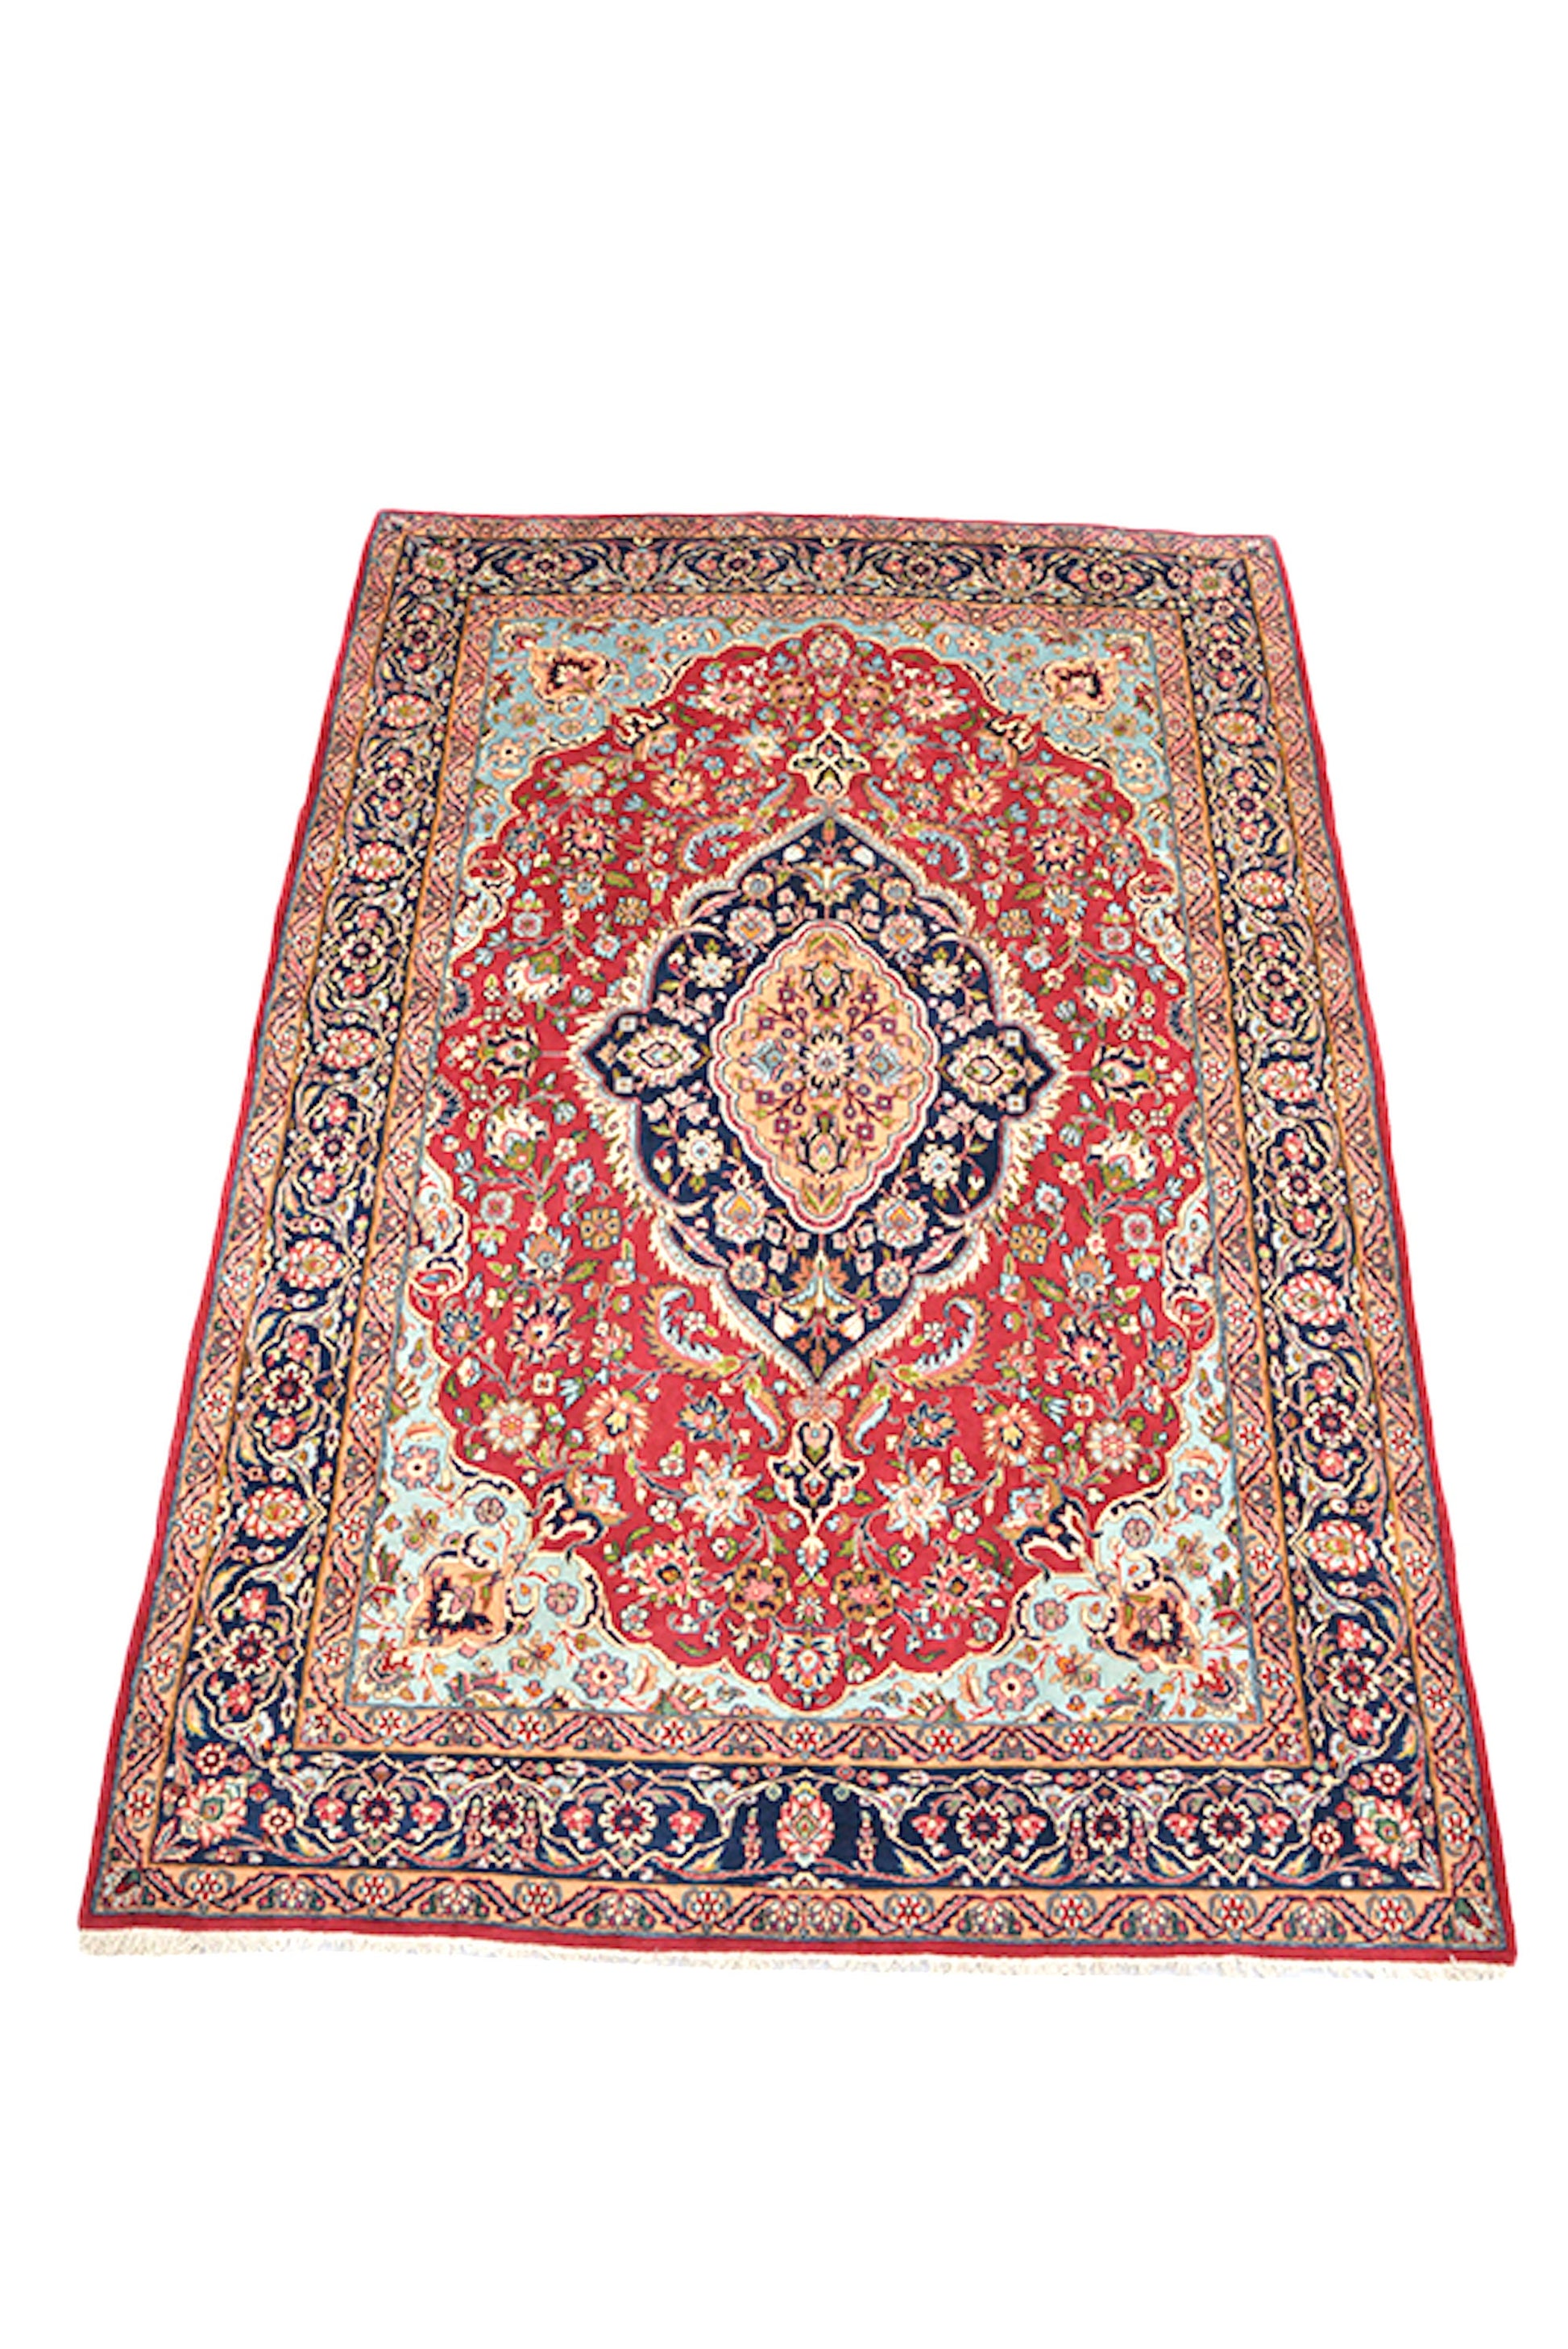 8 x 11 Feet Colorful Medallion Rug | Handmade Area Rug | Oriental Persian Caucasian Rug | Floral Living Room Rug | Wool Tribal Vintage